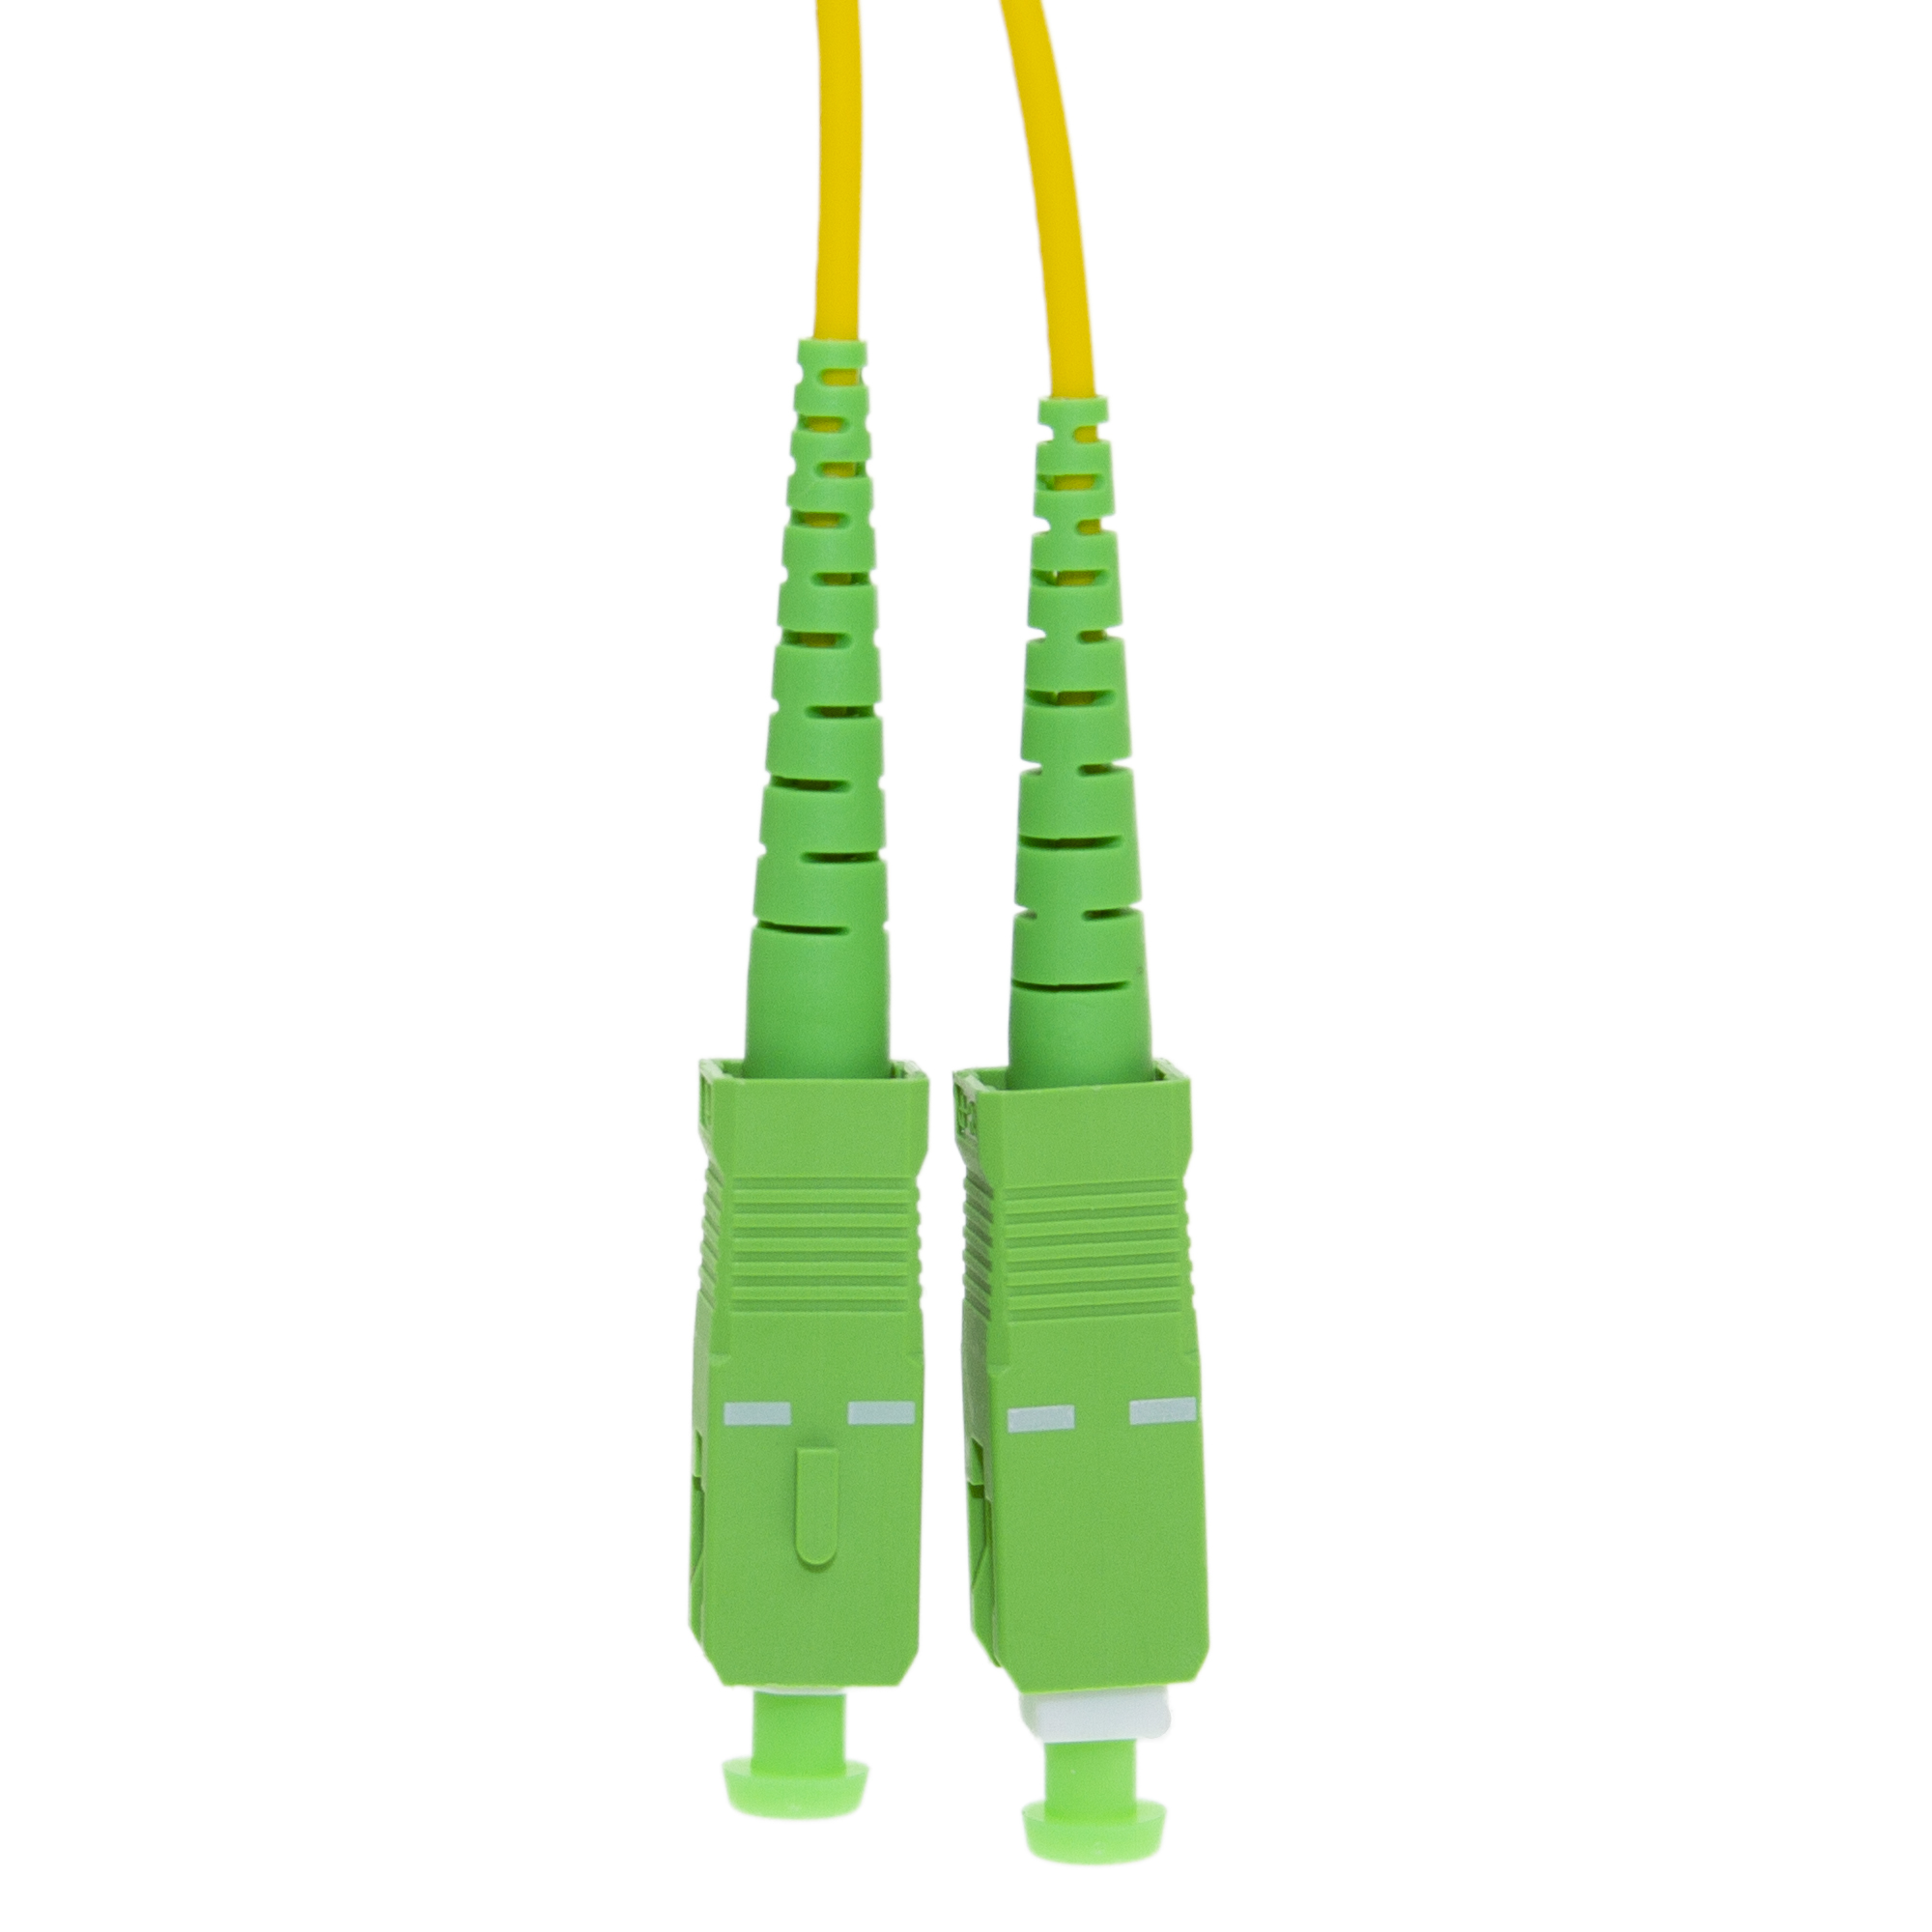 Factory Power Digital  (3) Cable fibra óptica SC/APC 3M